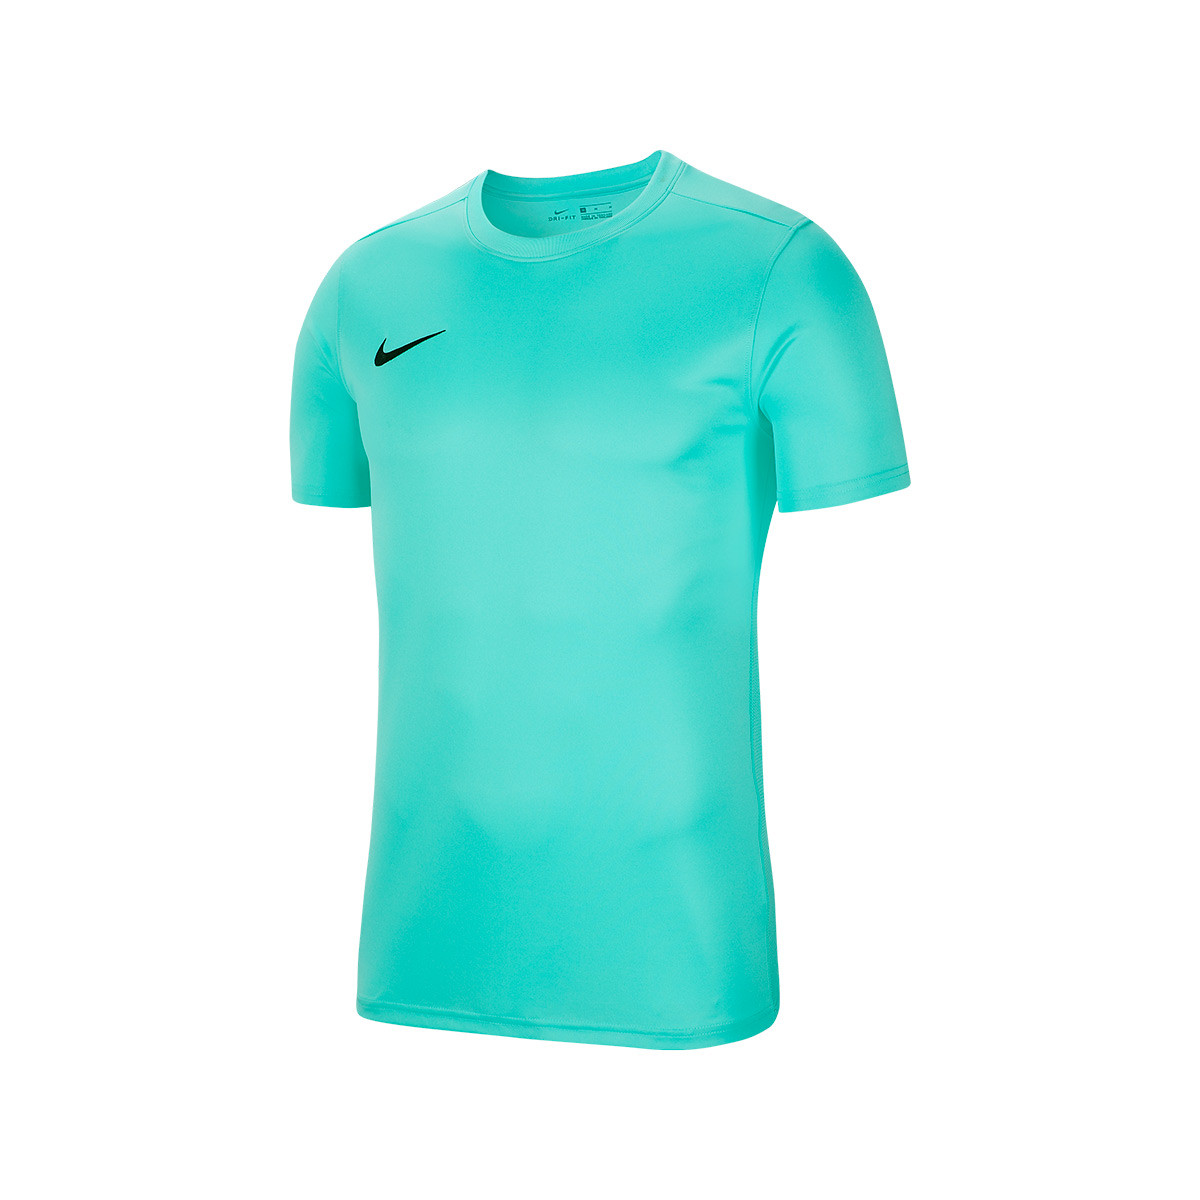 trabajo compañero fotografía Camiseta Nike Park VII m/c Hyper turquoise - Fútbol Emotion